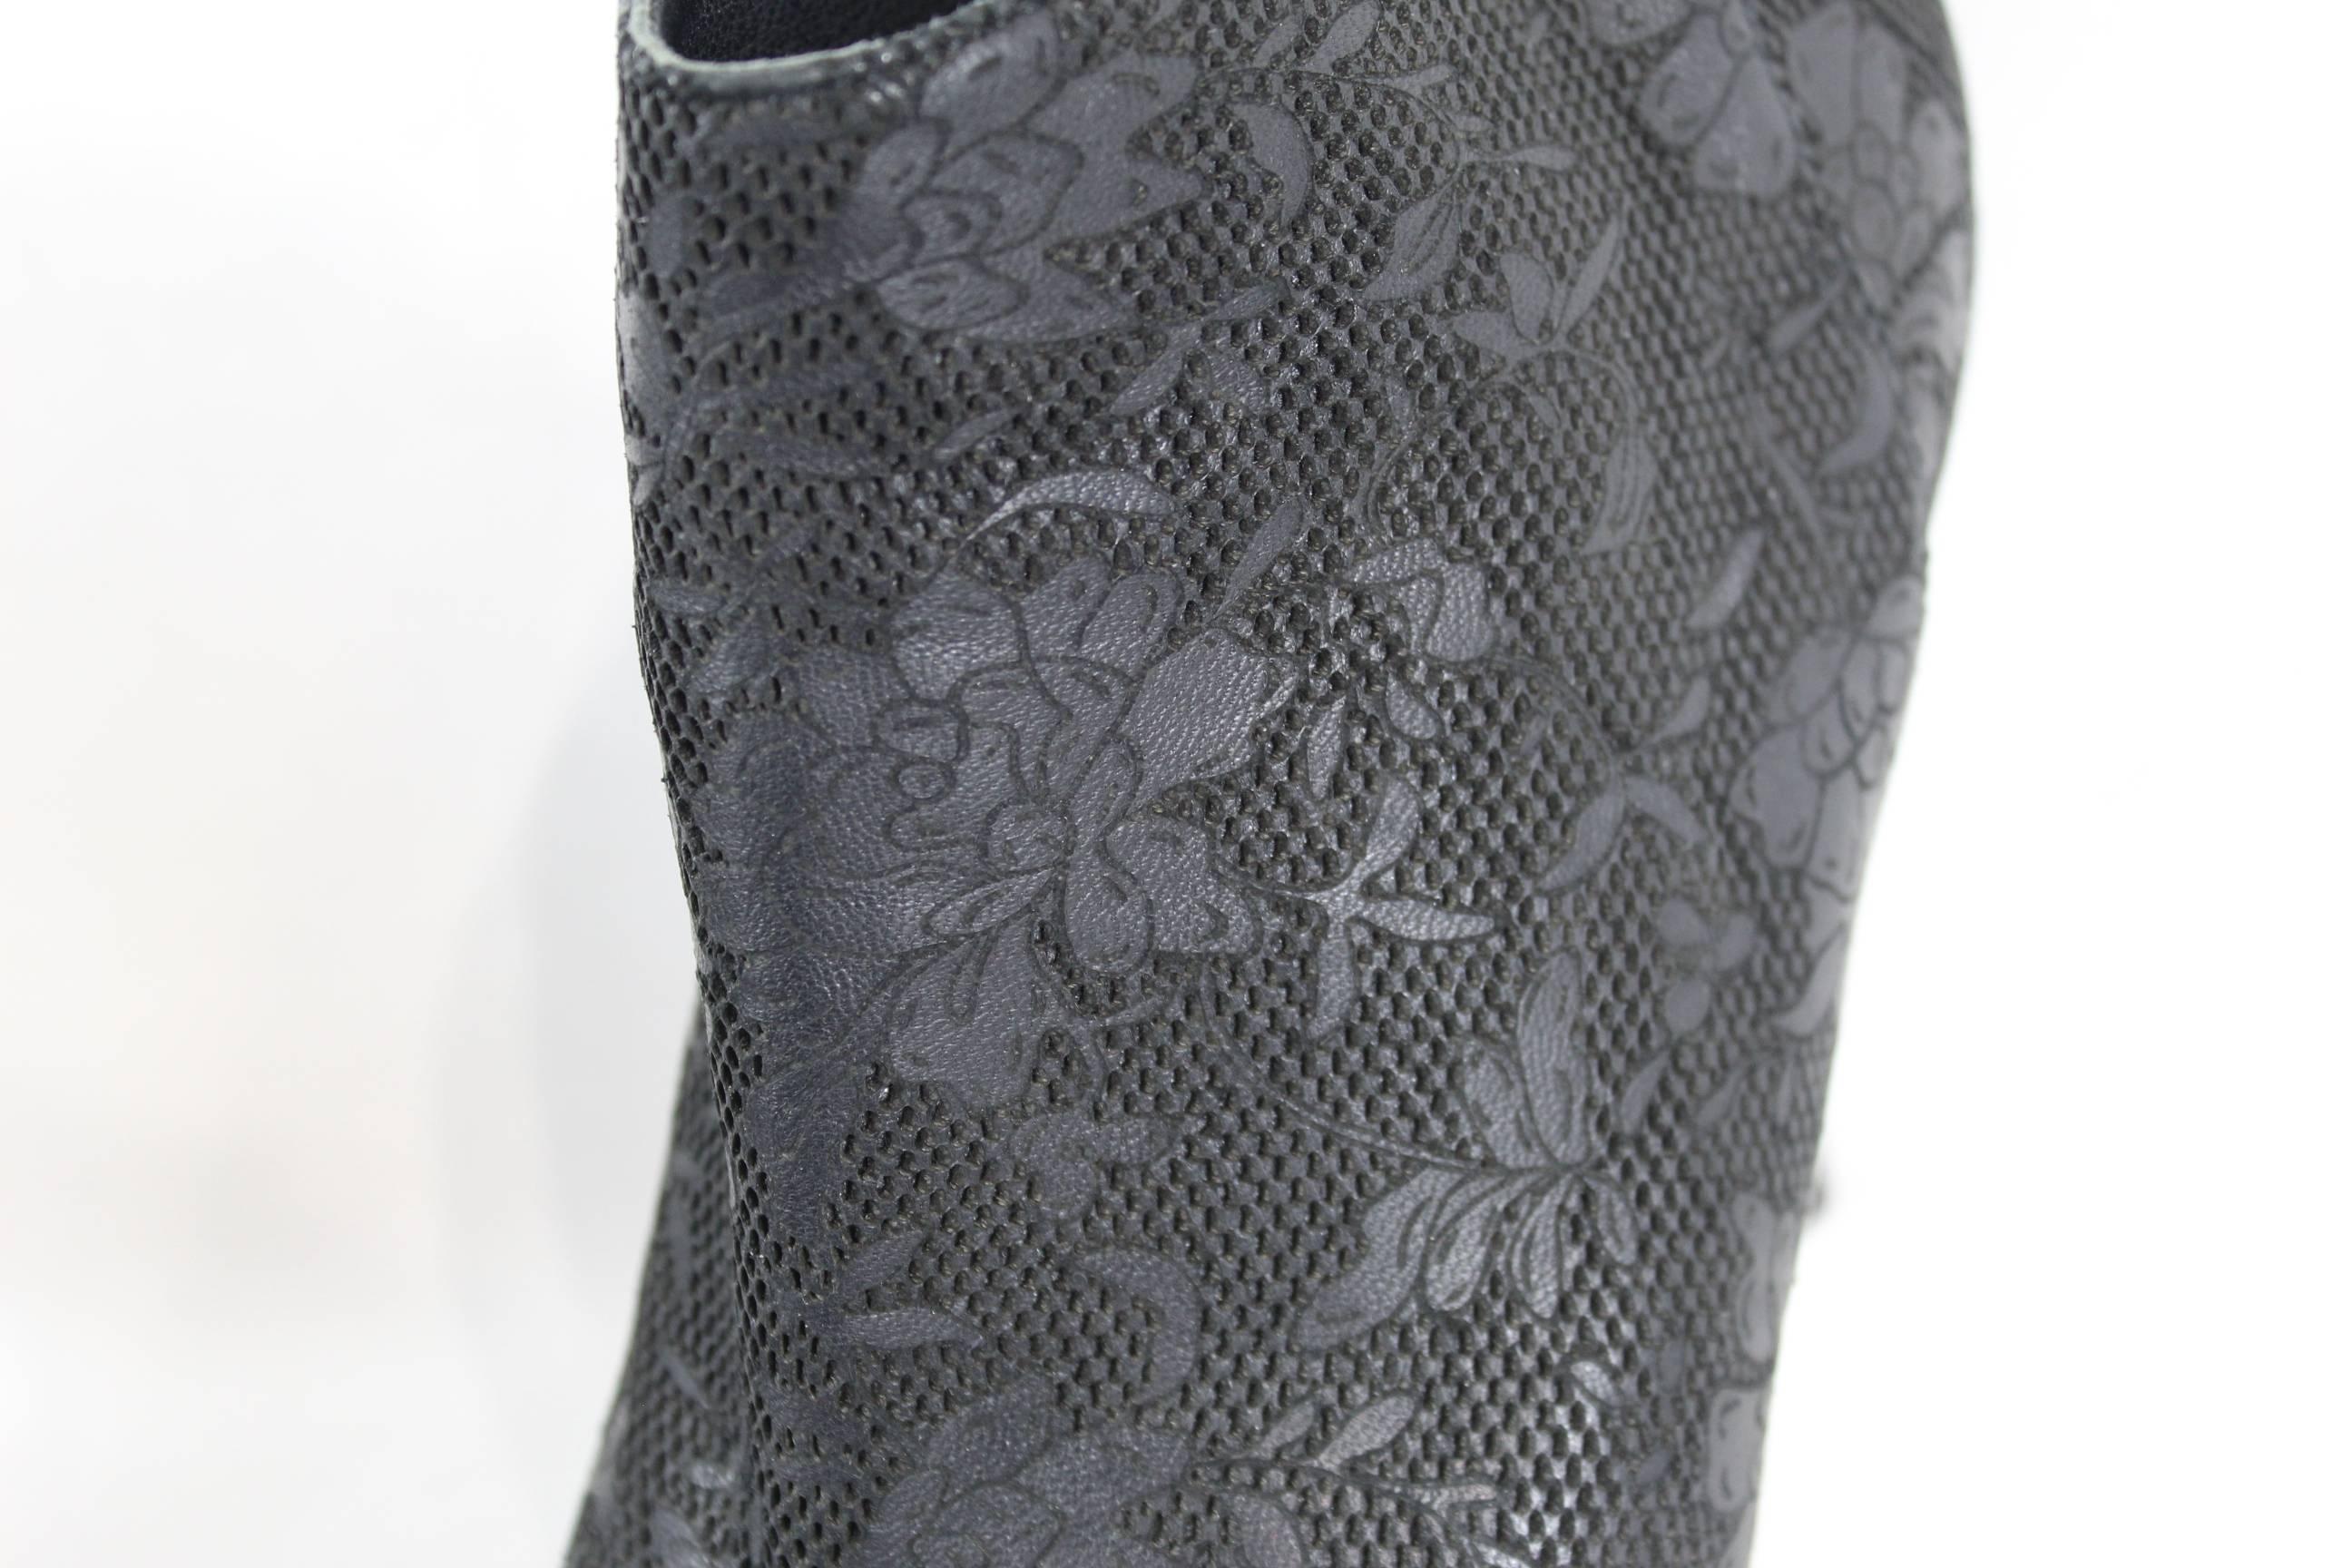 Black Chanel Flower Open Toe Ankle Boots. Size 7, 5